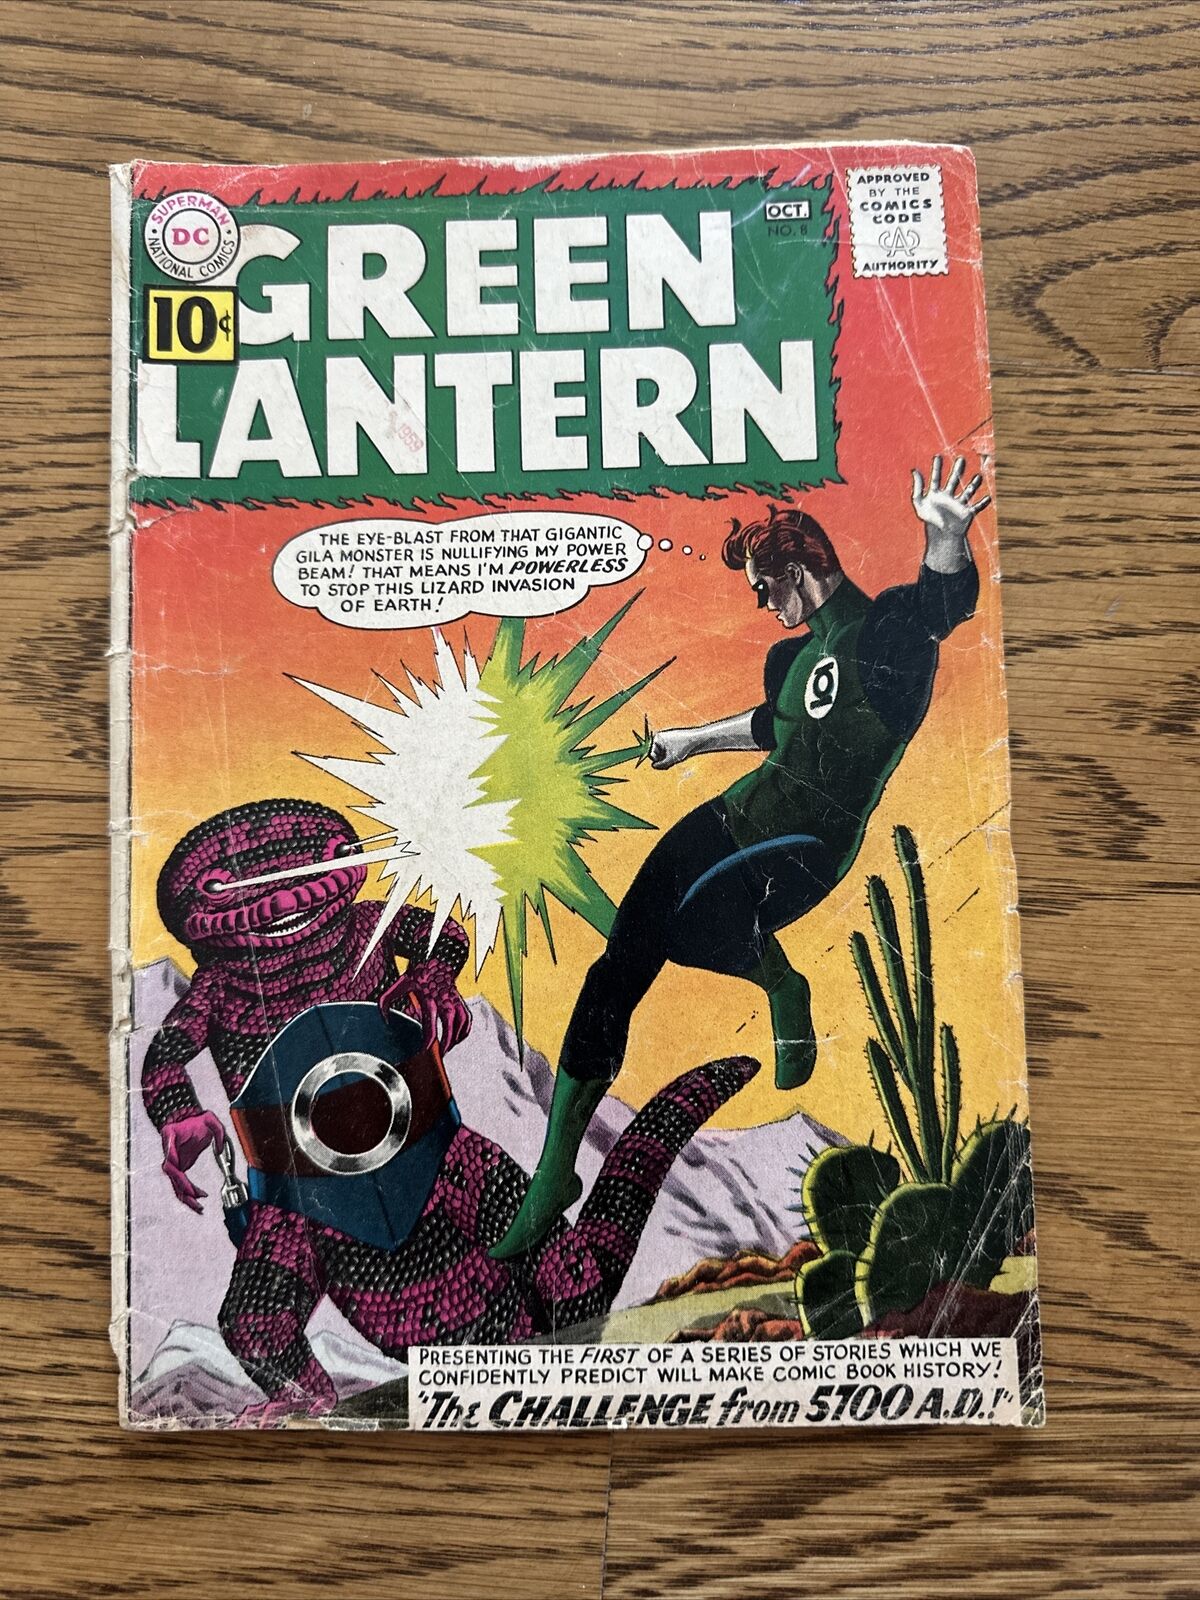 Green Lantern #8 (DC 1961) 1st App 5700 A.D. Pol Manning & Iona Vane GD